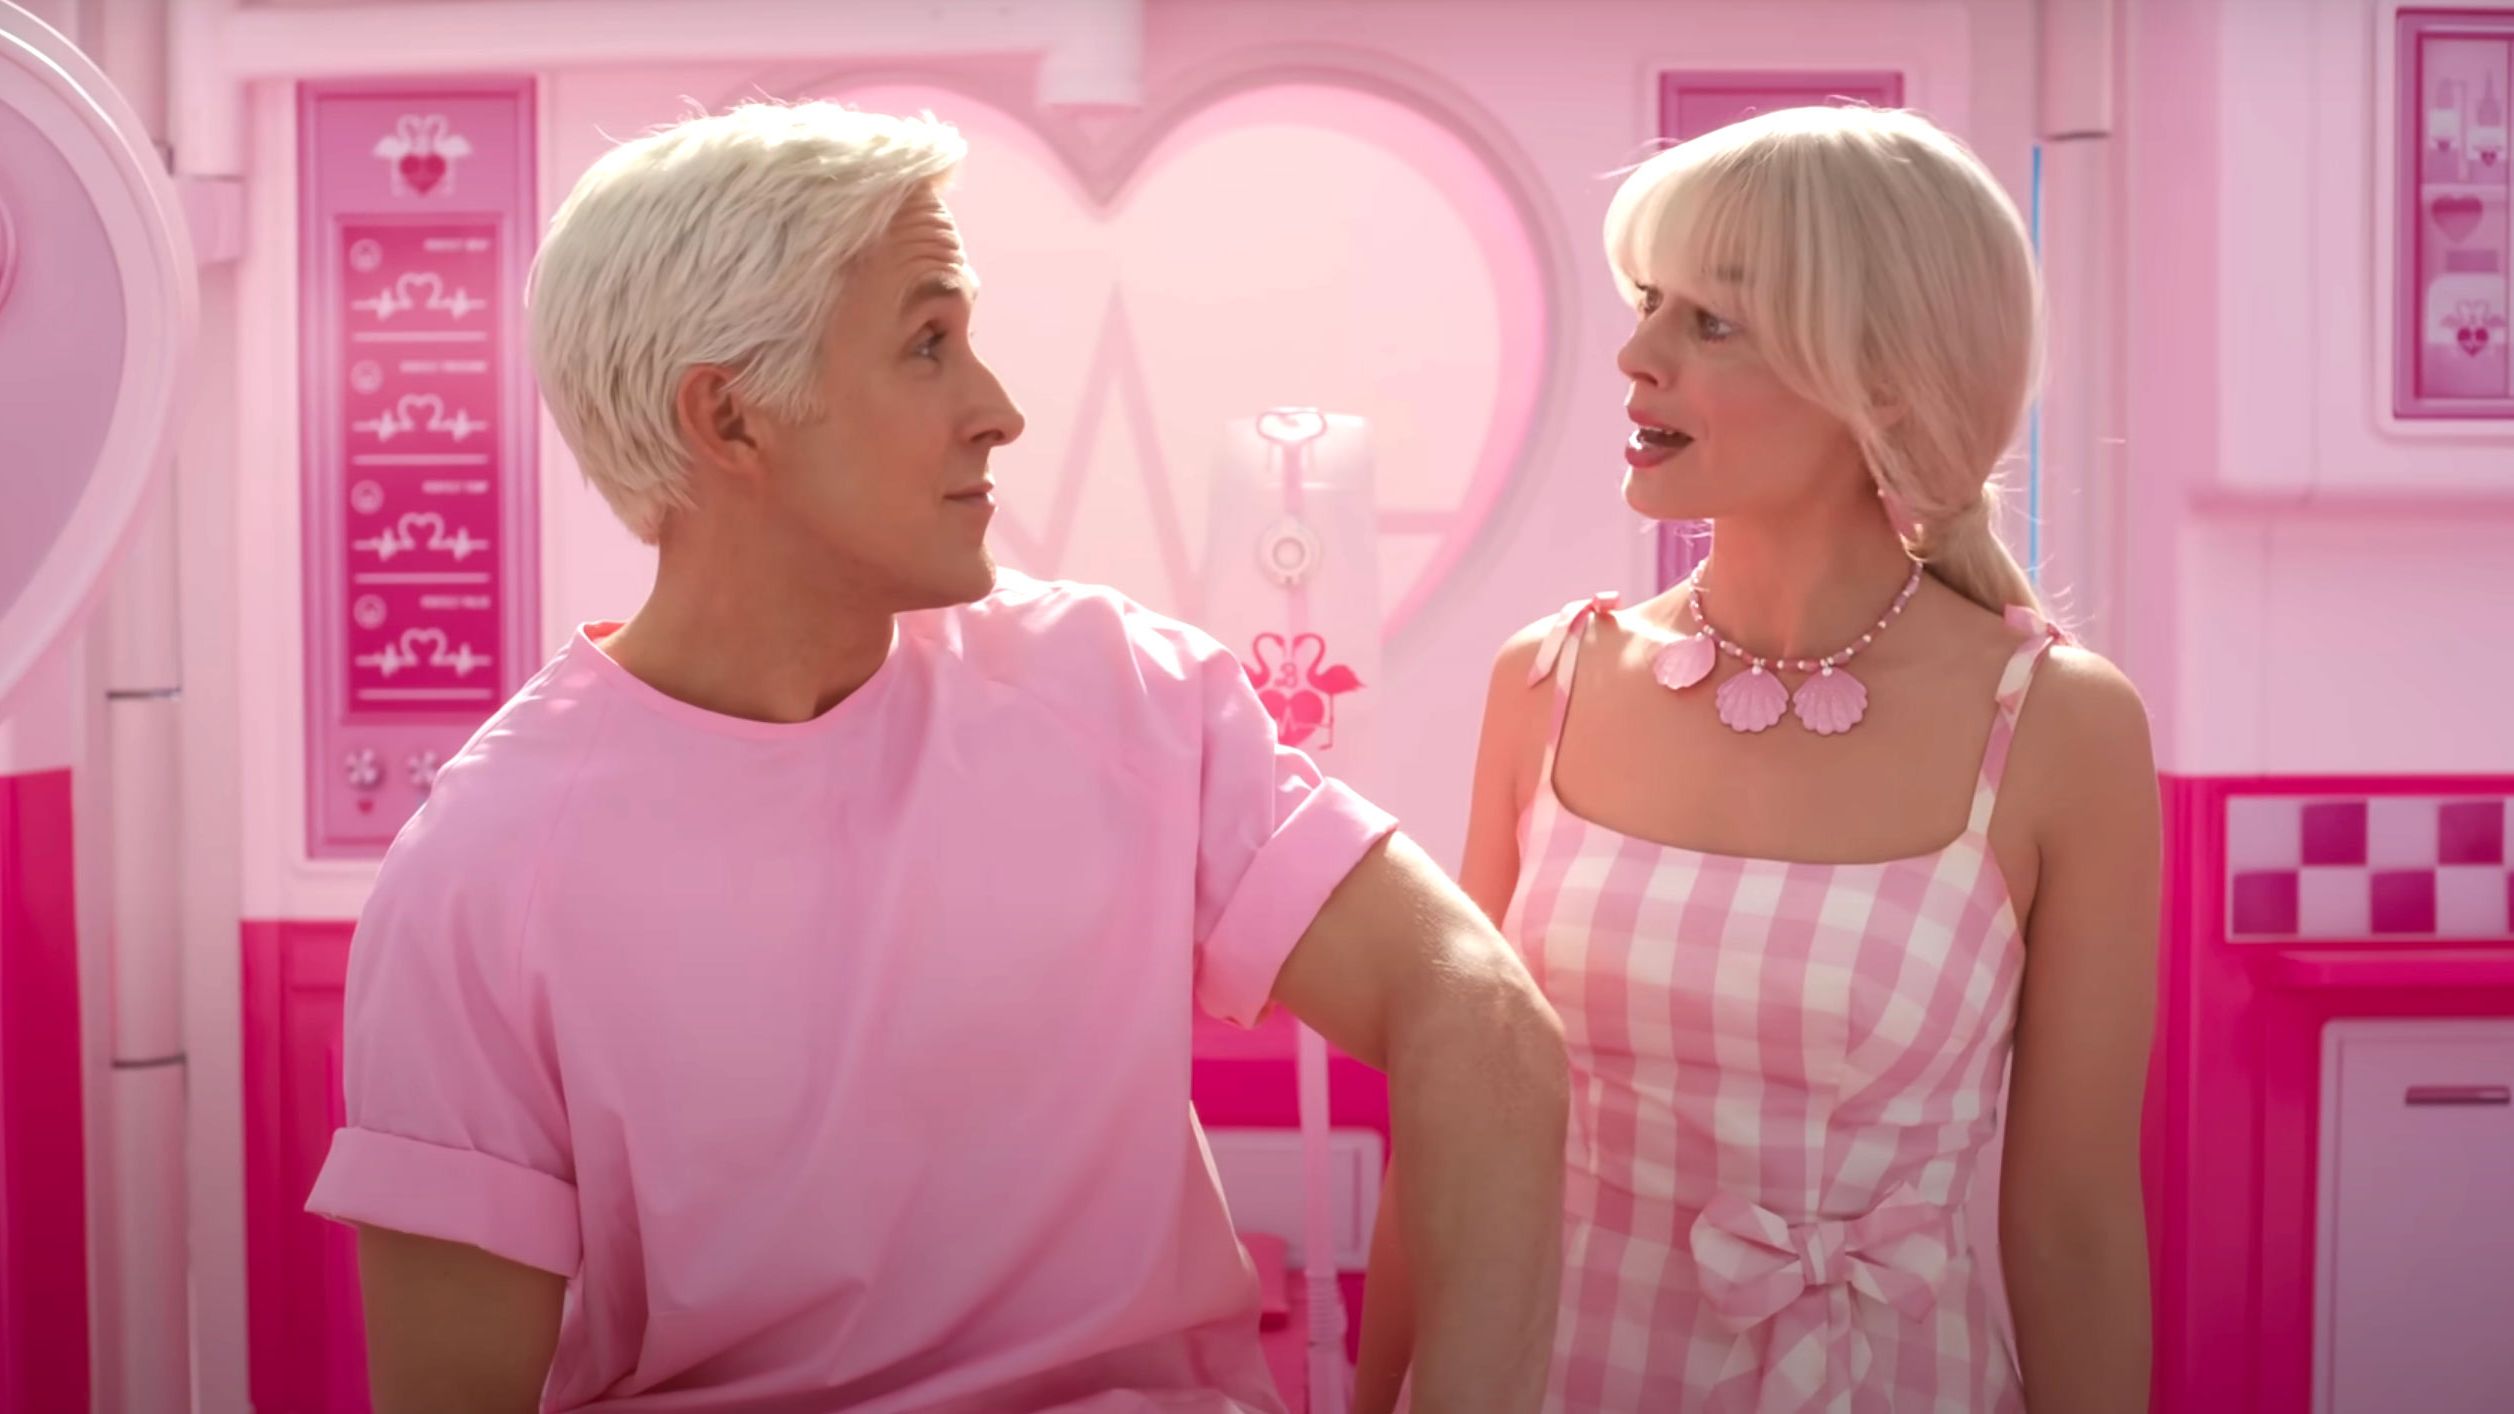 The Gray Man Cast Talk Ryan Gosling In Barbie & Spy Facial Hair